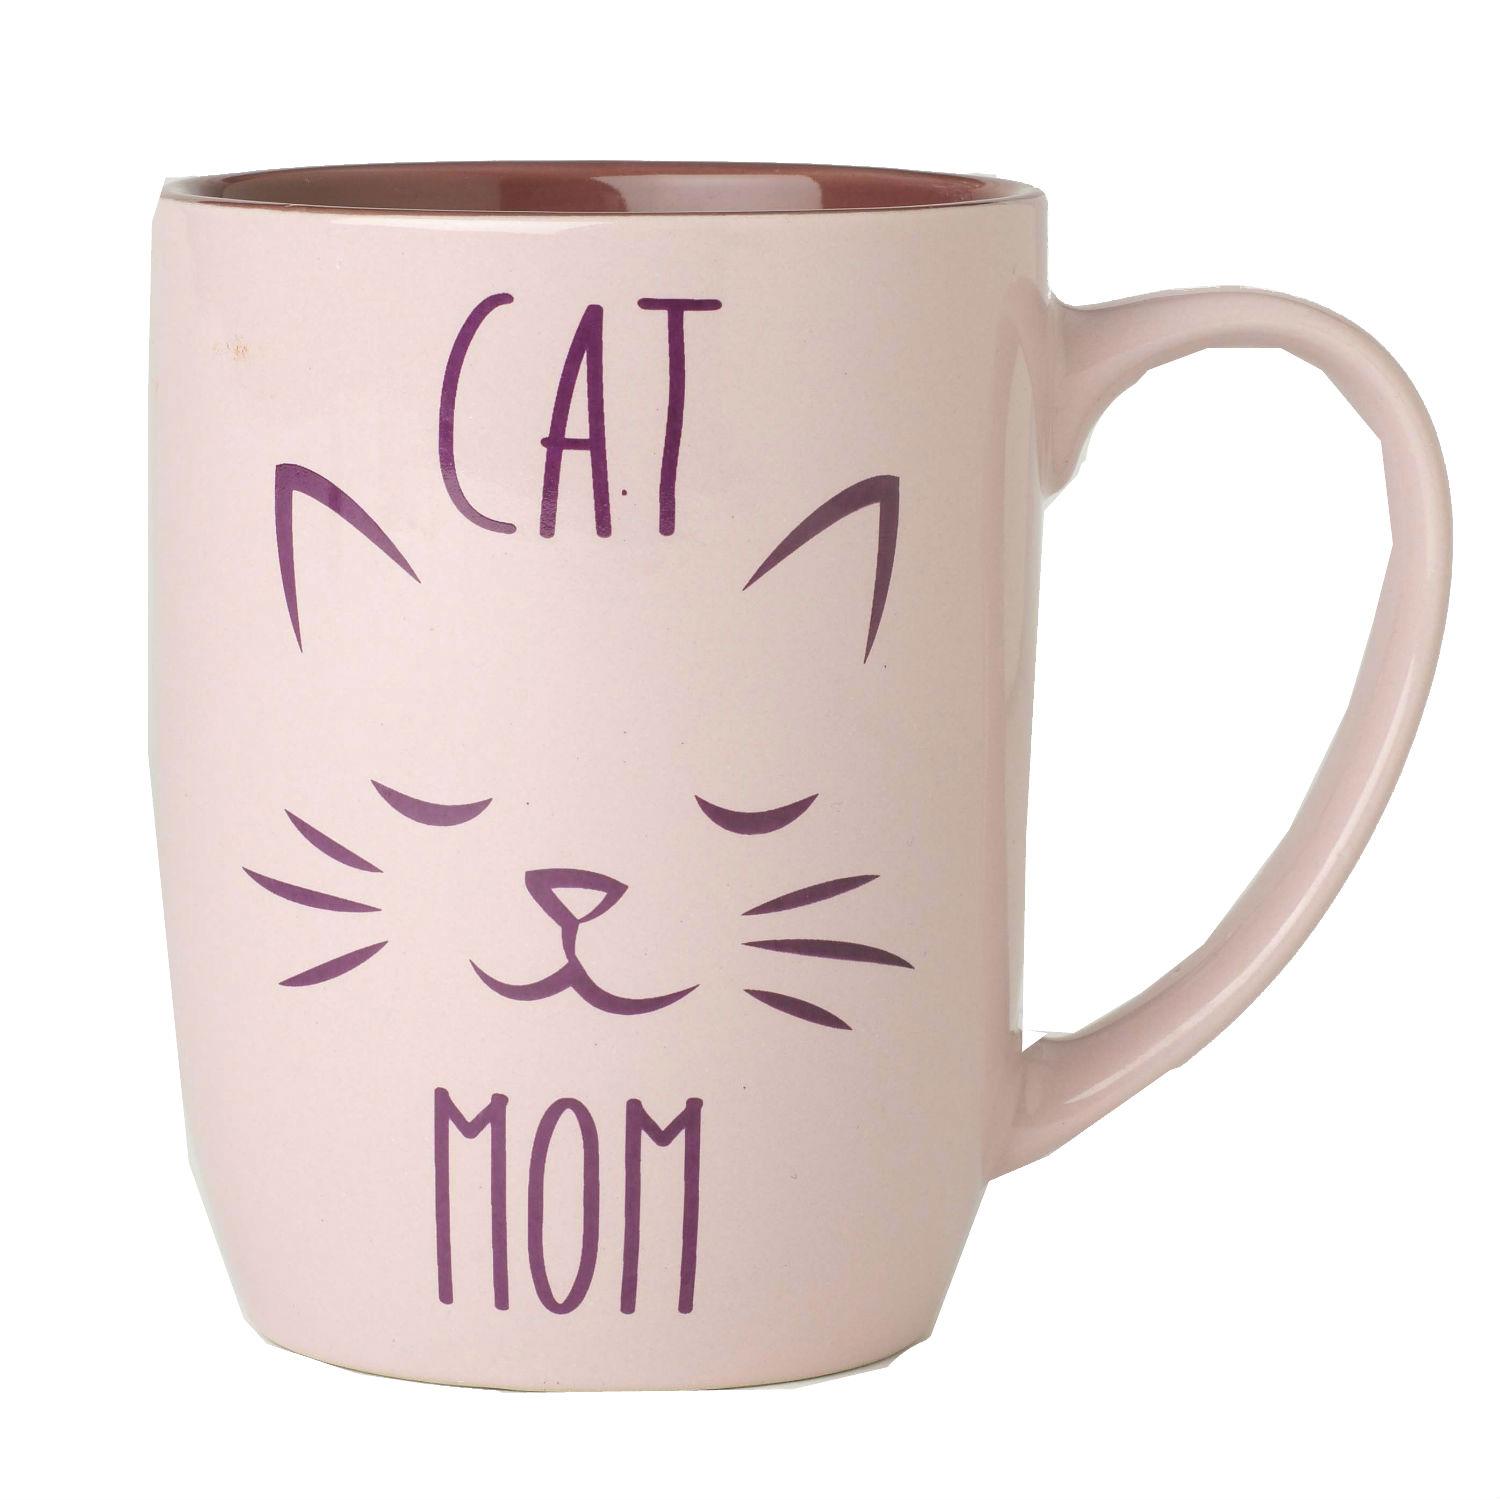 Petrageous Cat Mom Mug